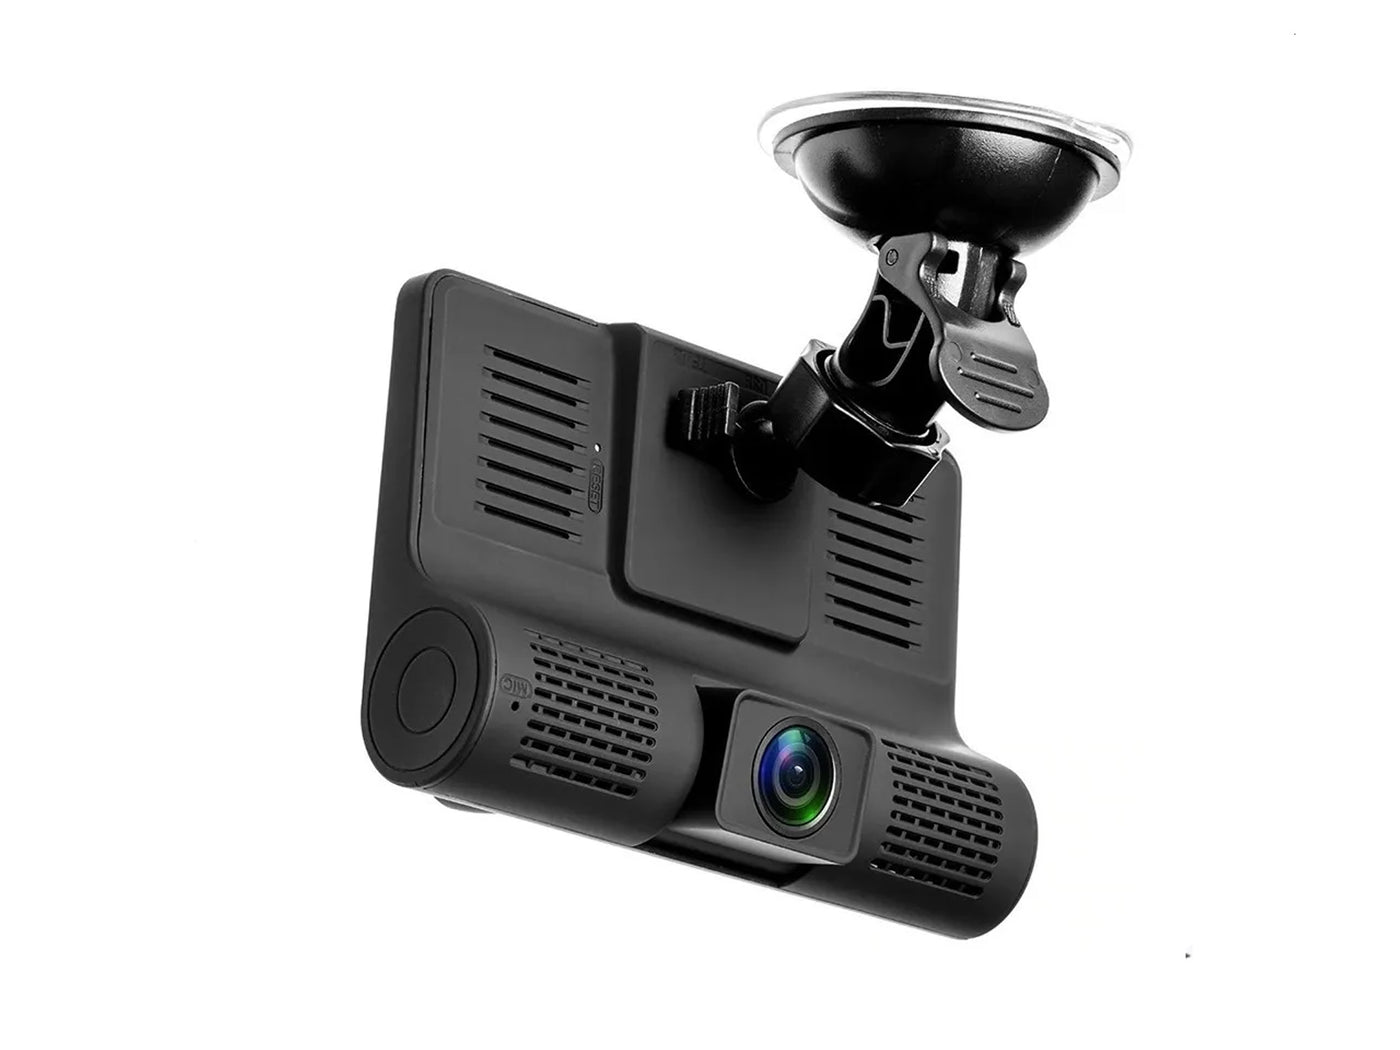 Comprar Icreative Car DVR 3 cámaras Full HD 1080P cámara DVR de